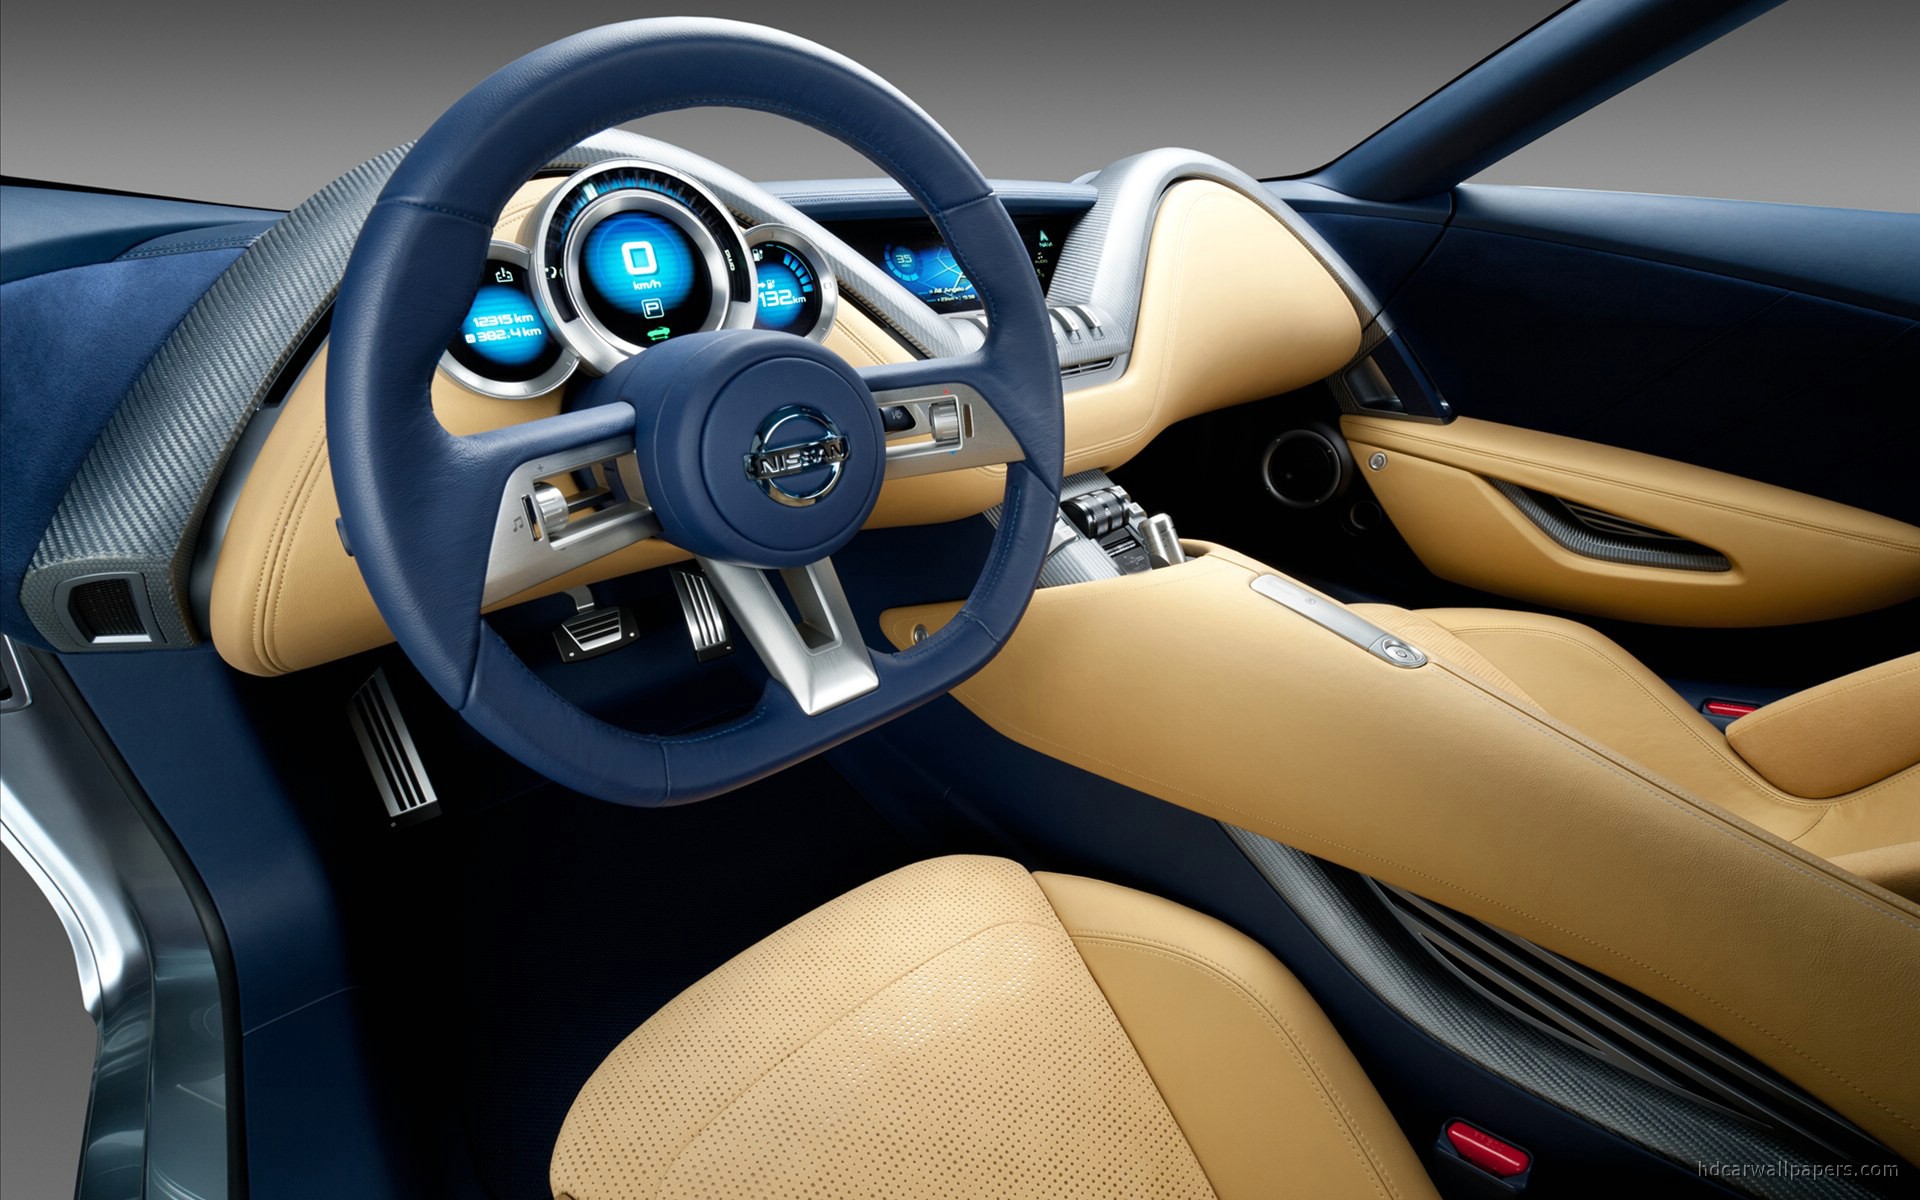 6225 views 2011 Nissan Electric Sports Concept Car Interior